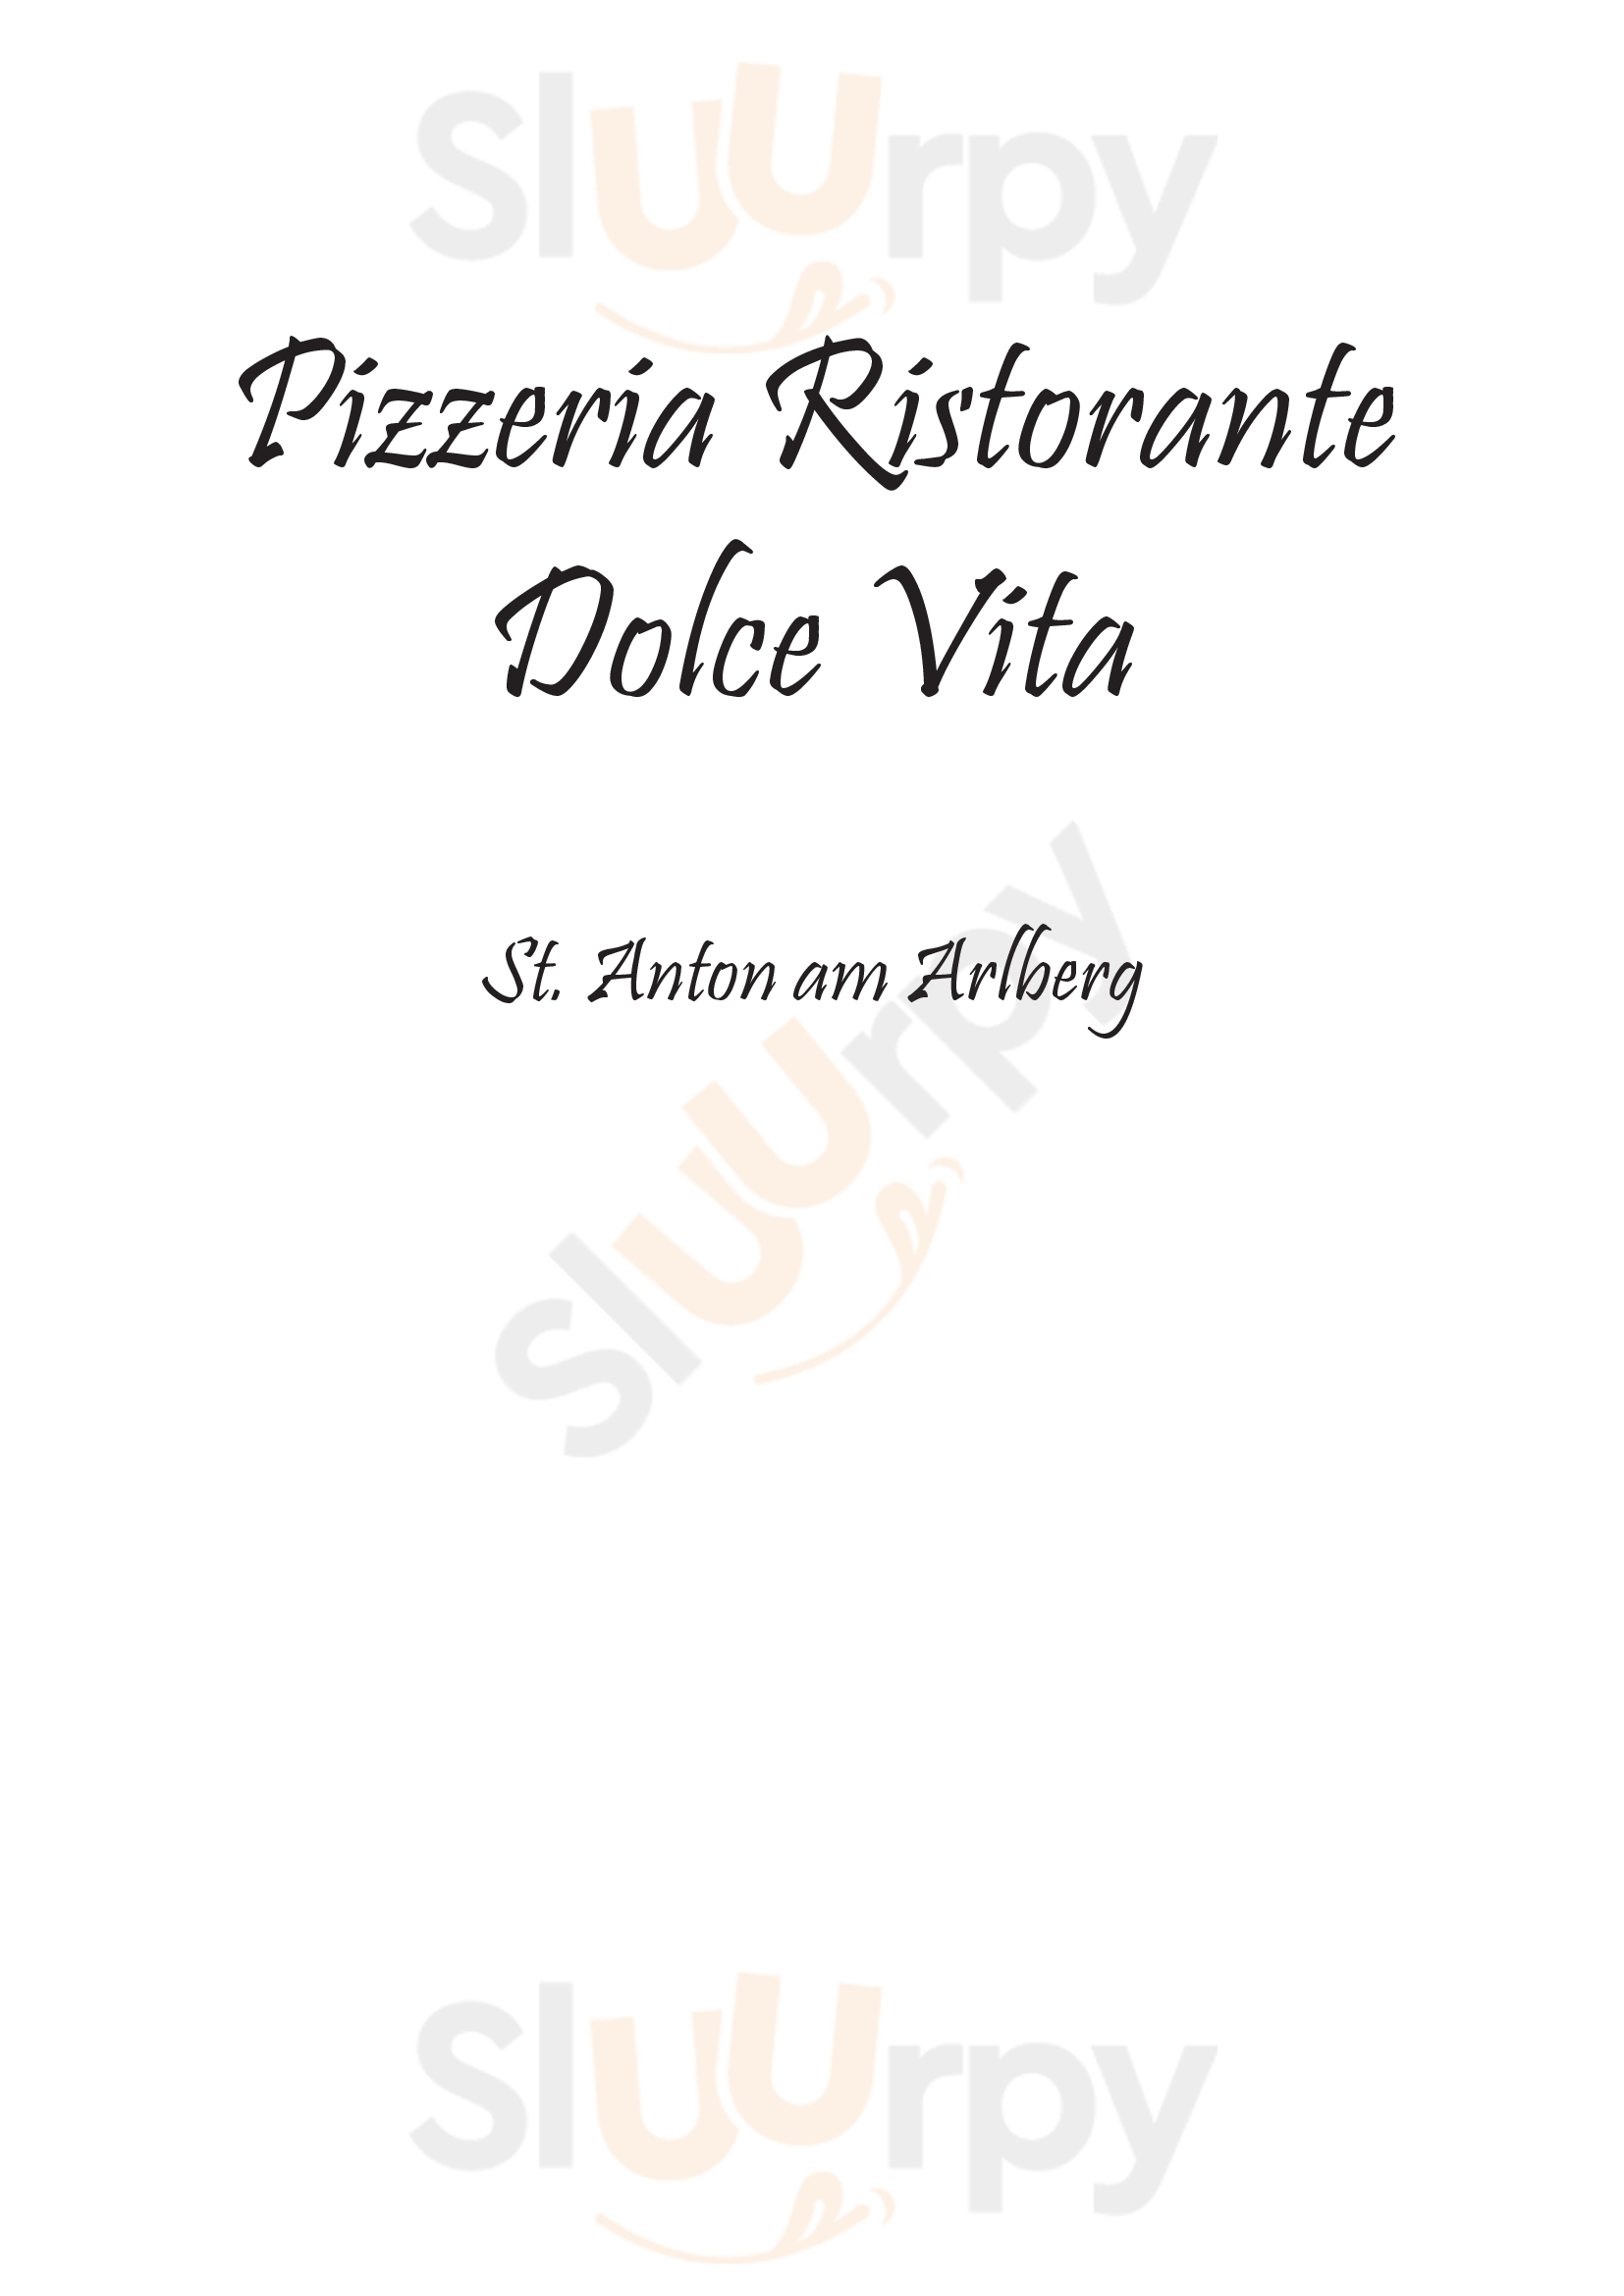 Pizzeria Ristorante Dolce Vita St. Anton am Arlberg Menu - 1